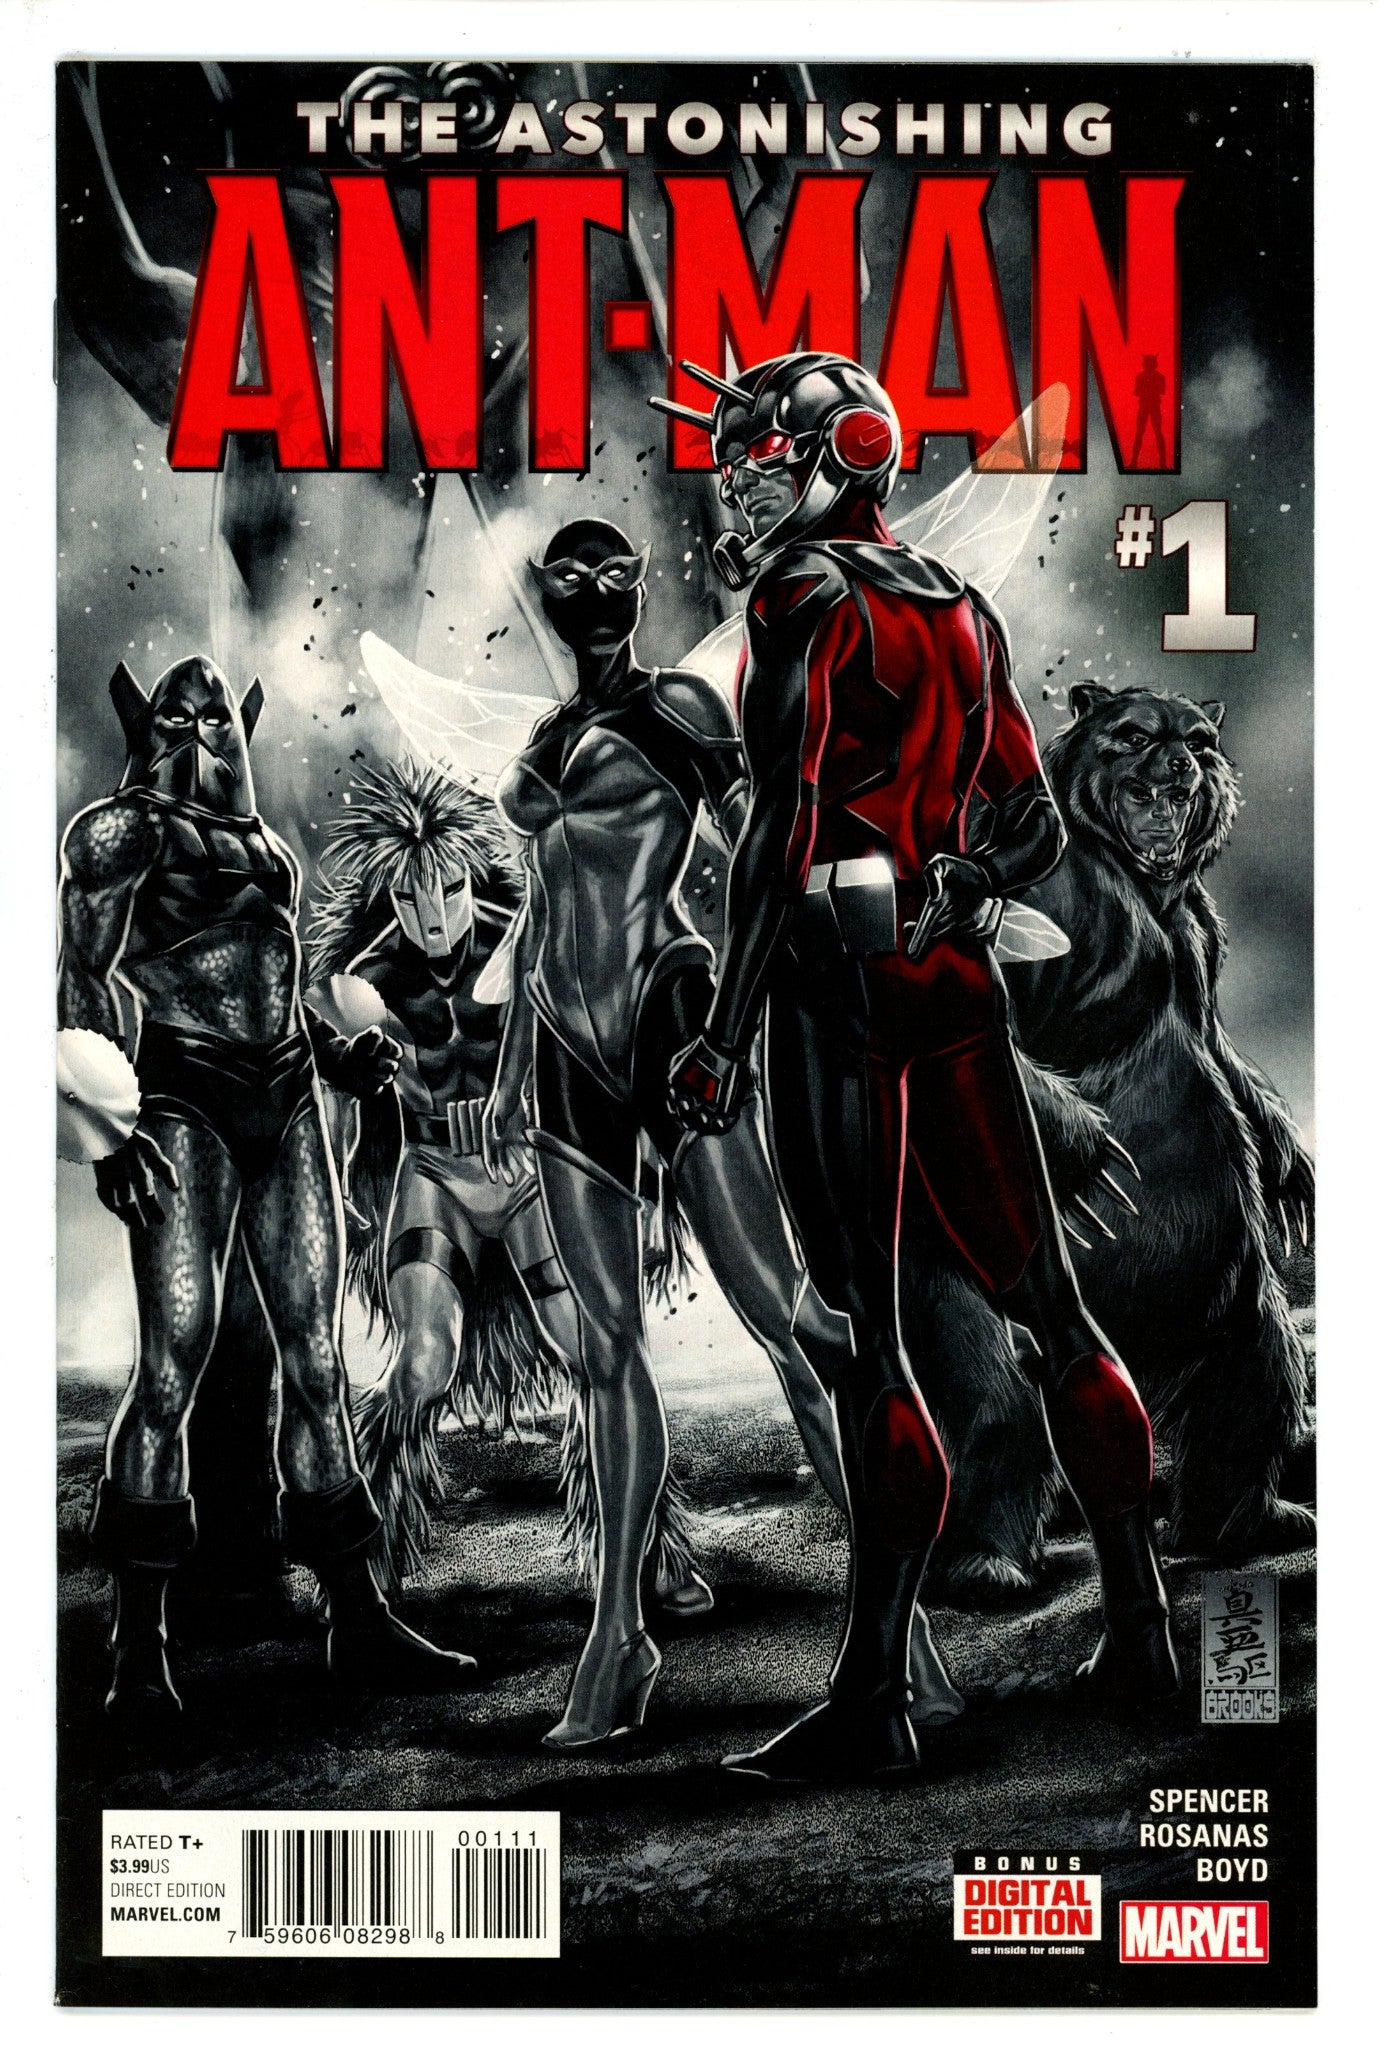 The Astonishing Ant-Man Vol 1 1